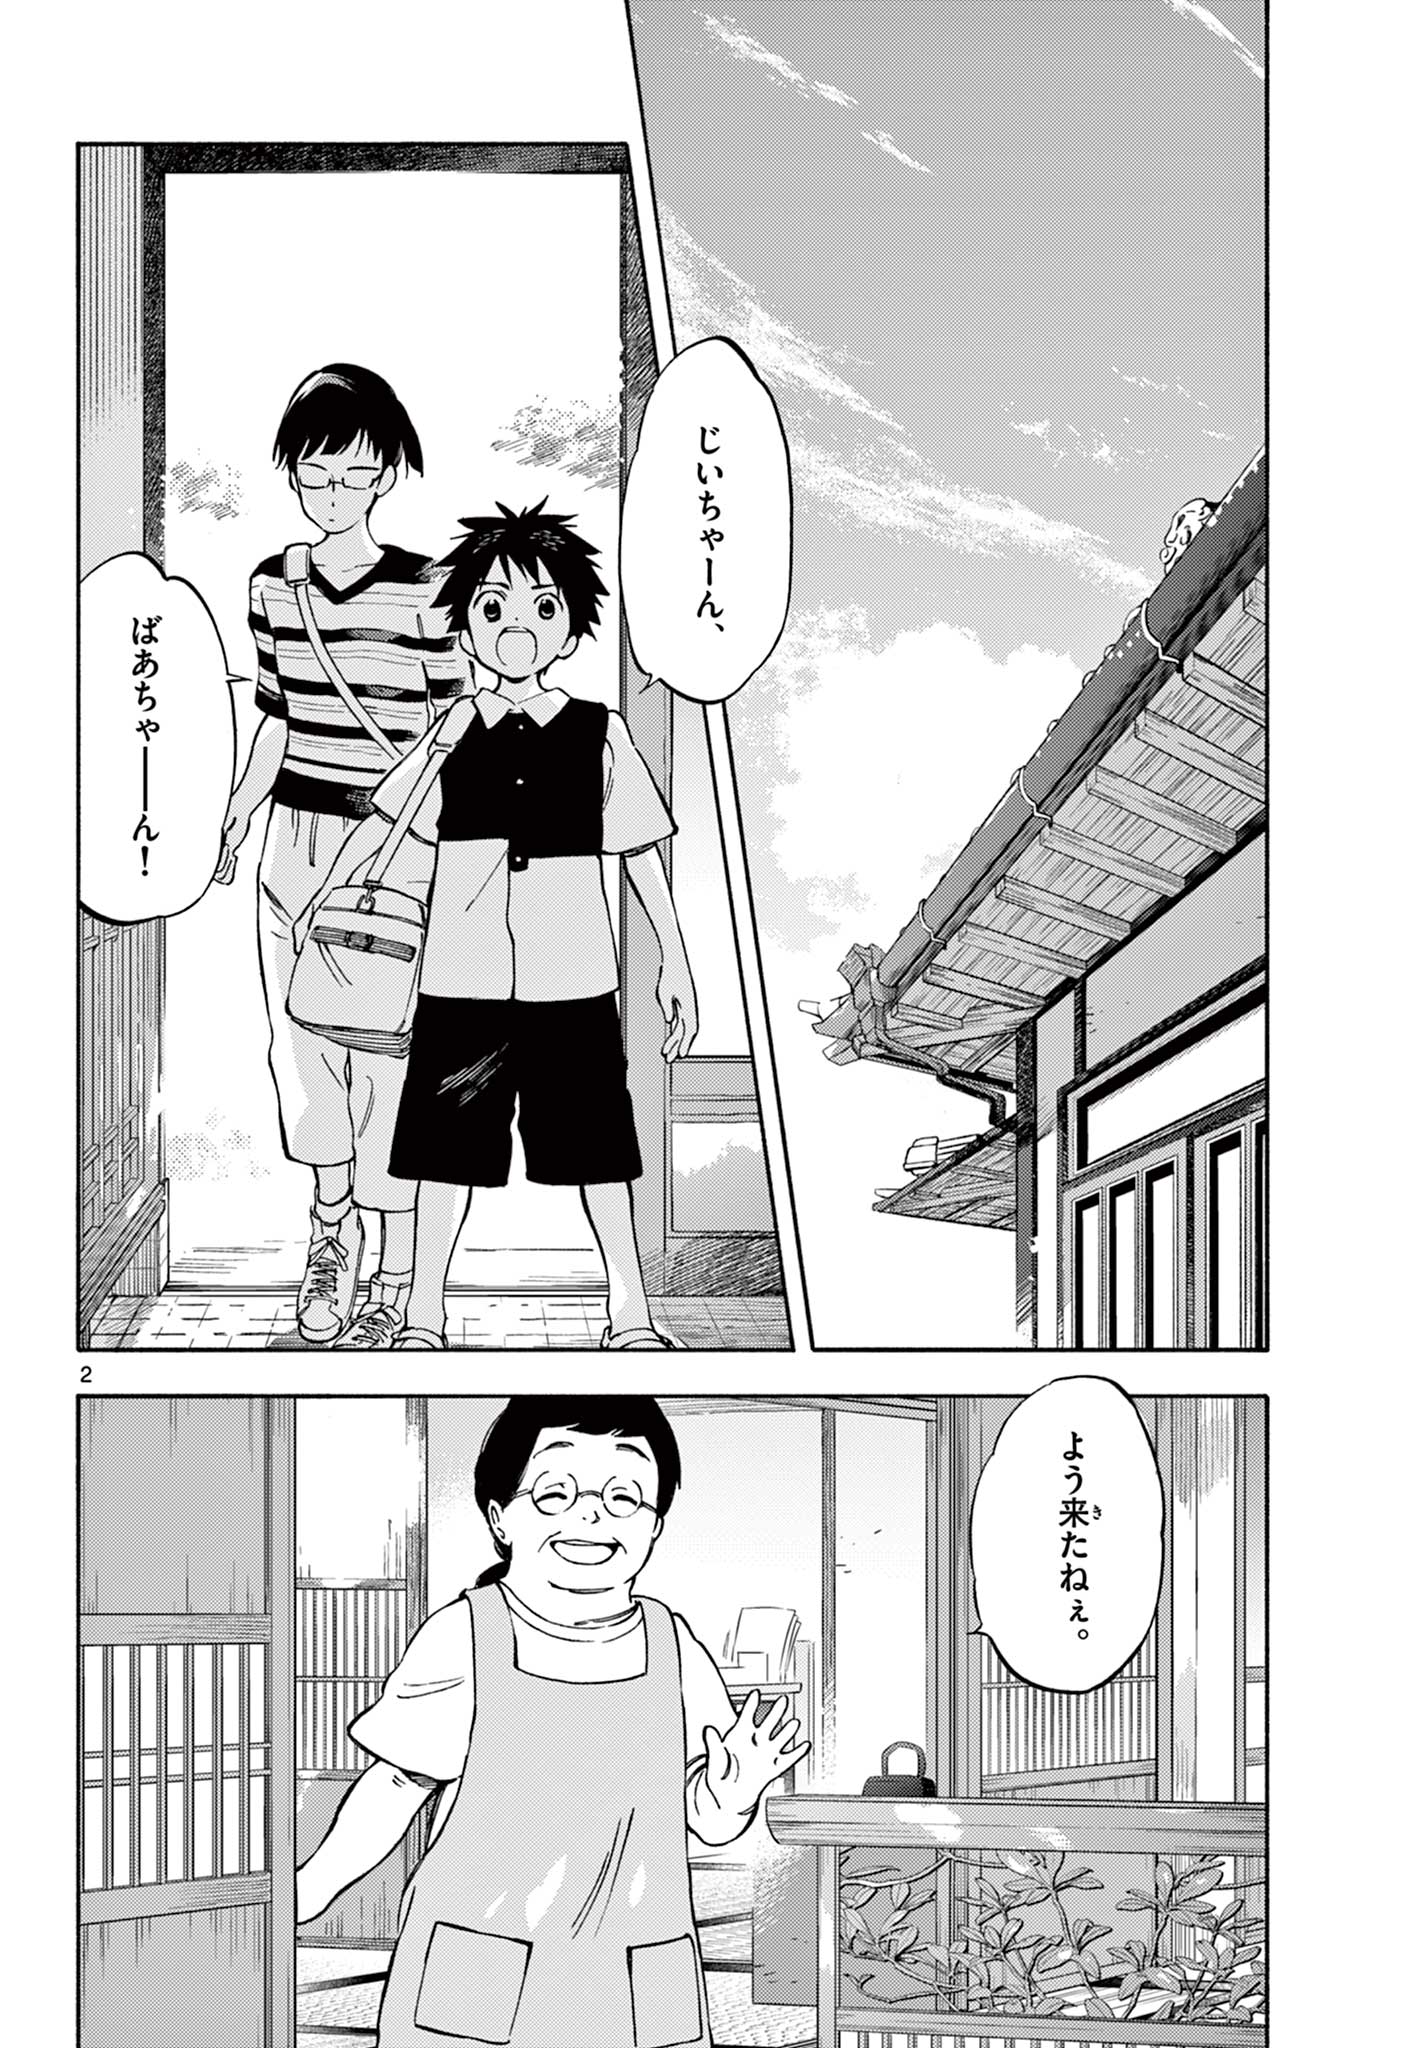 Nami no Shijima no Horizont - Chapter 12.1 - Page 2